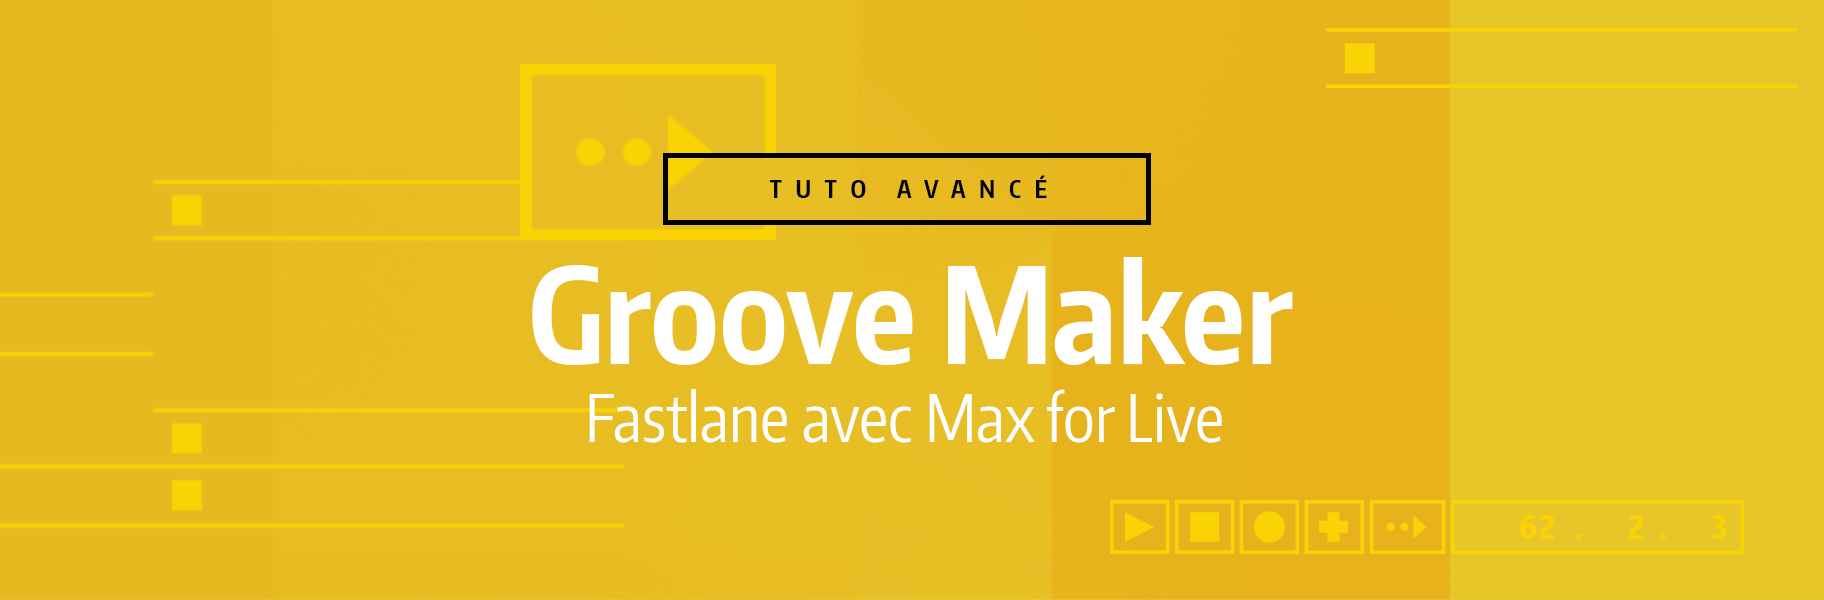 Tutoriel Ableton Live - Groove Maker Fastlane avec Max for Live